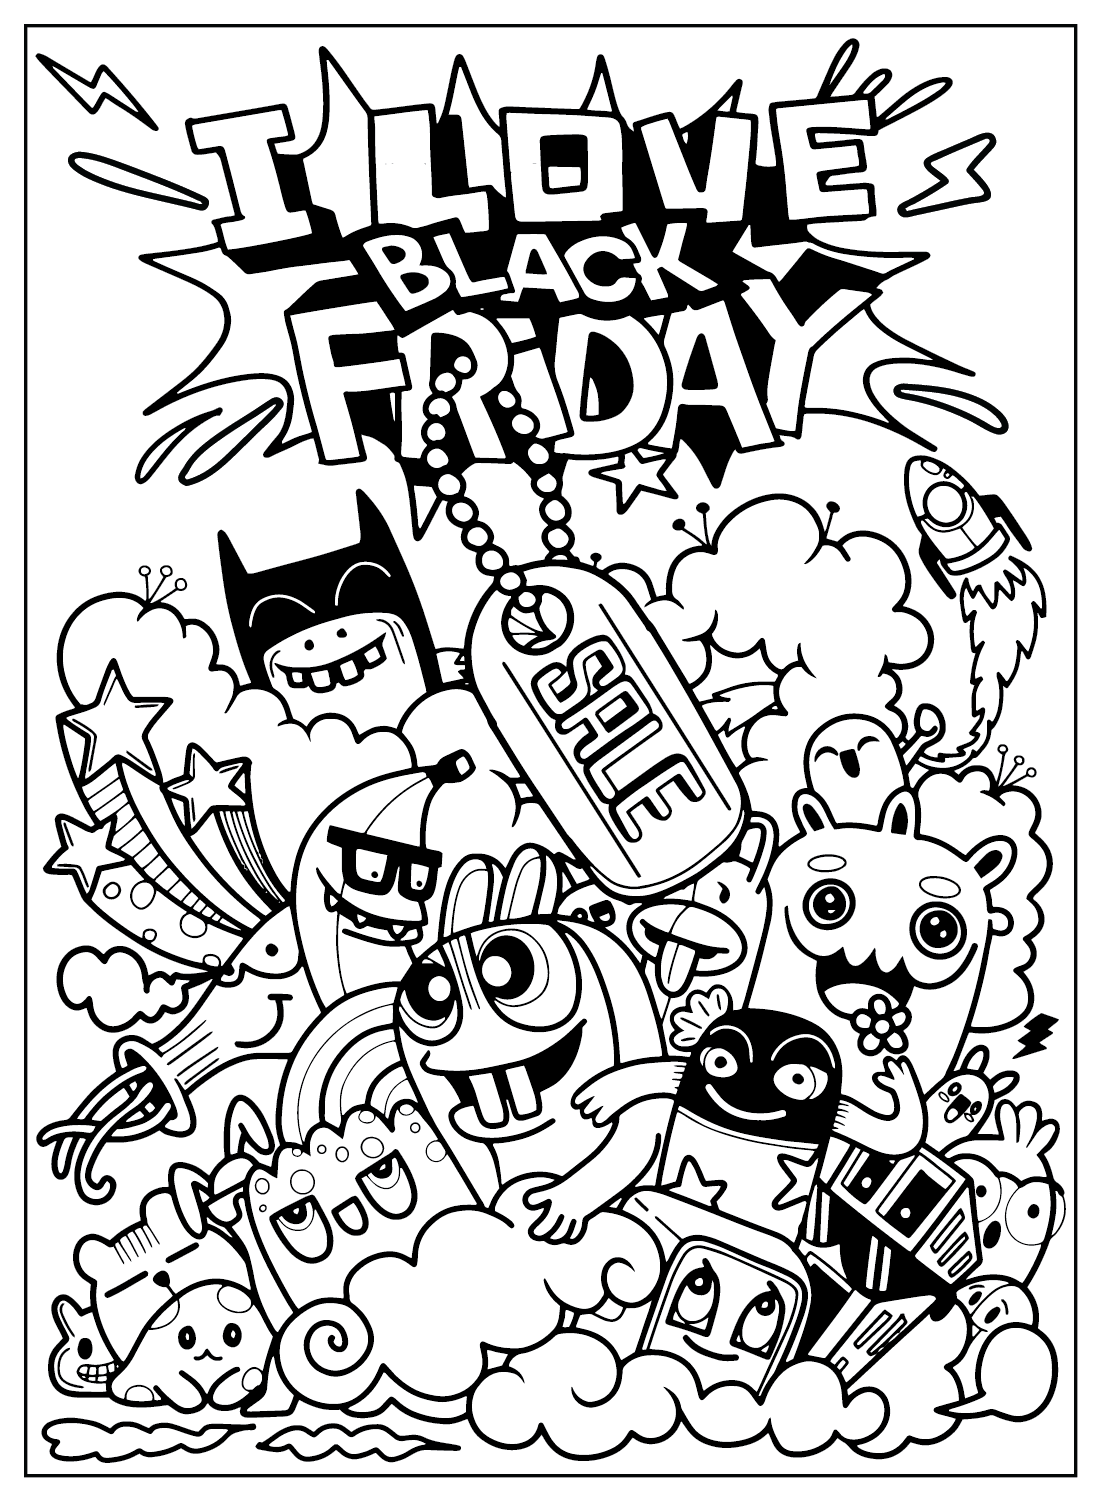 Pagina a colori del Black Friday dal Black Friday